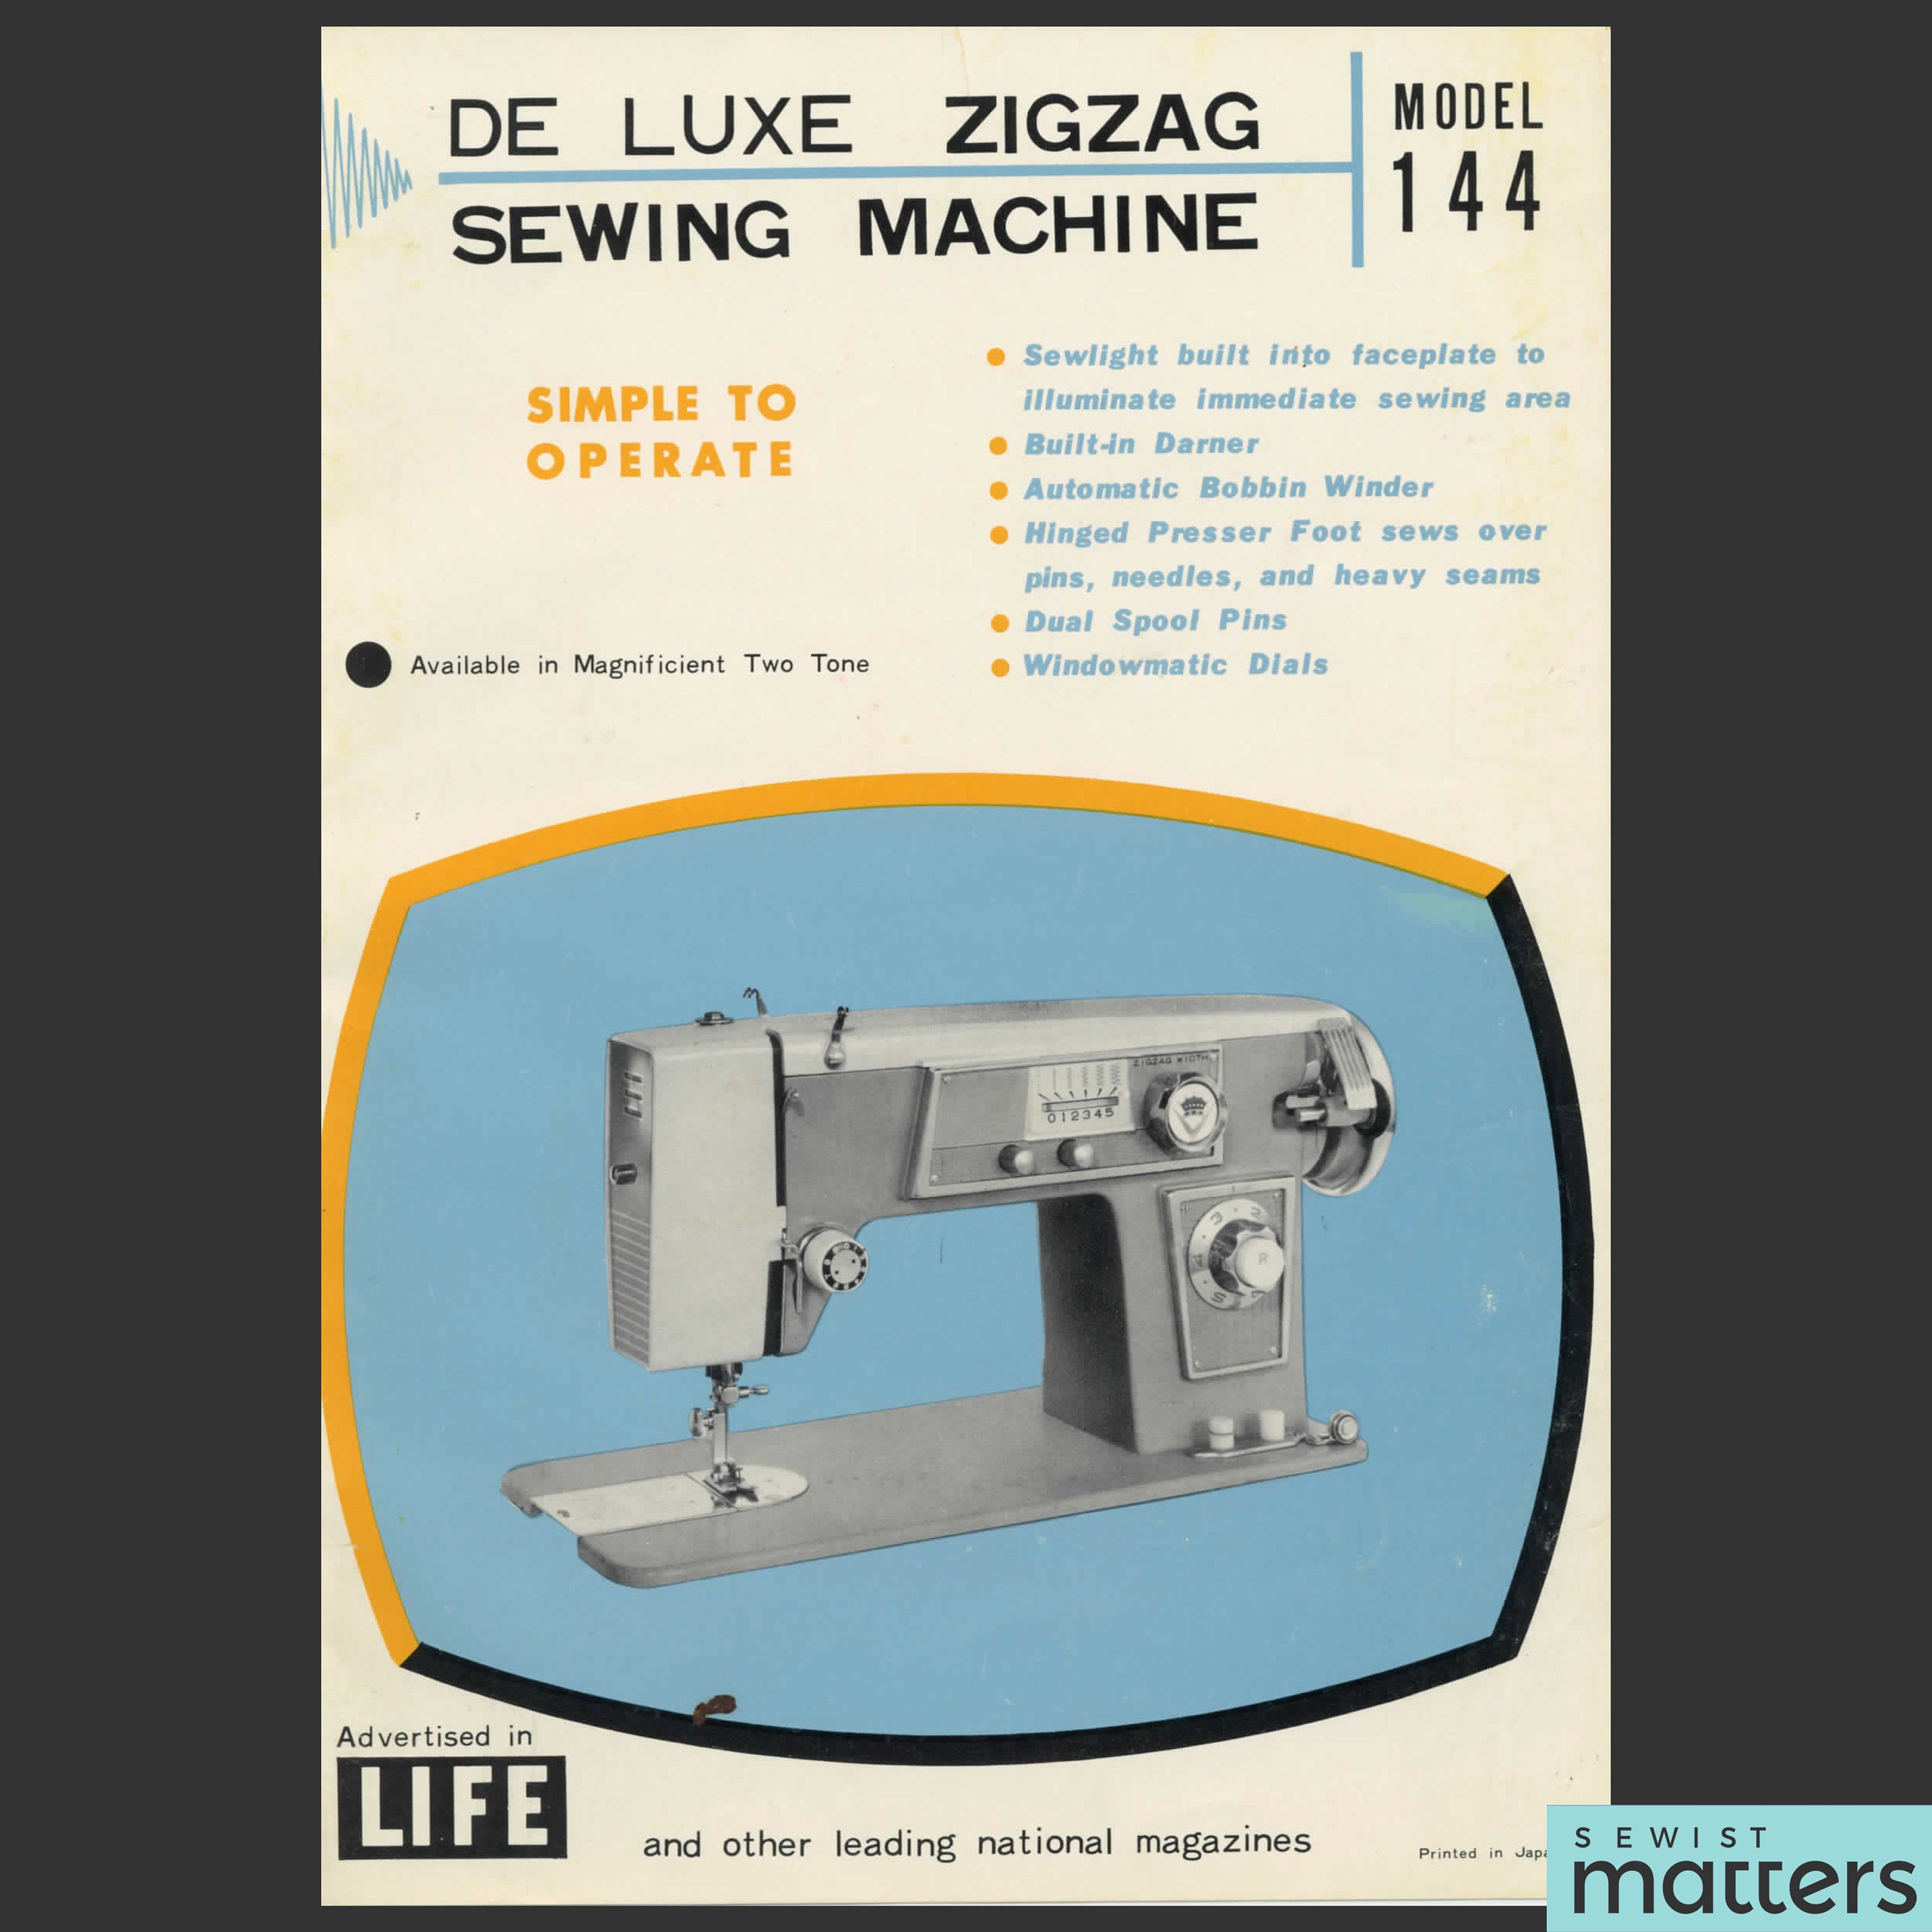 144 Dressmaker | Super Deluxe ZigZag Sewing Machine Instruction Book Manual  PDF Download